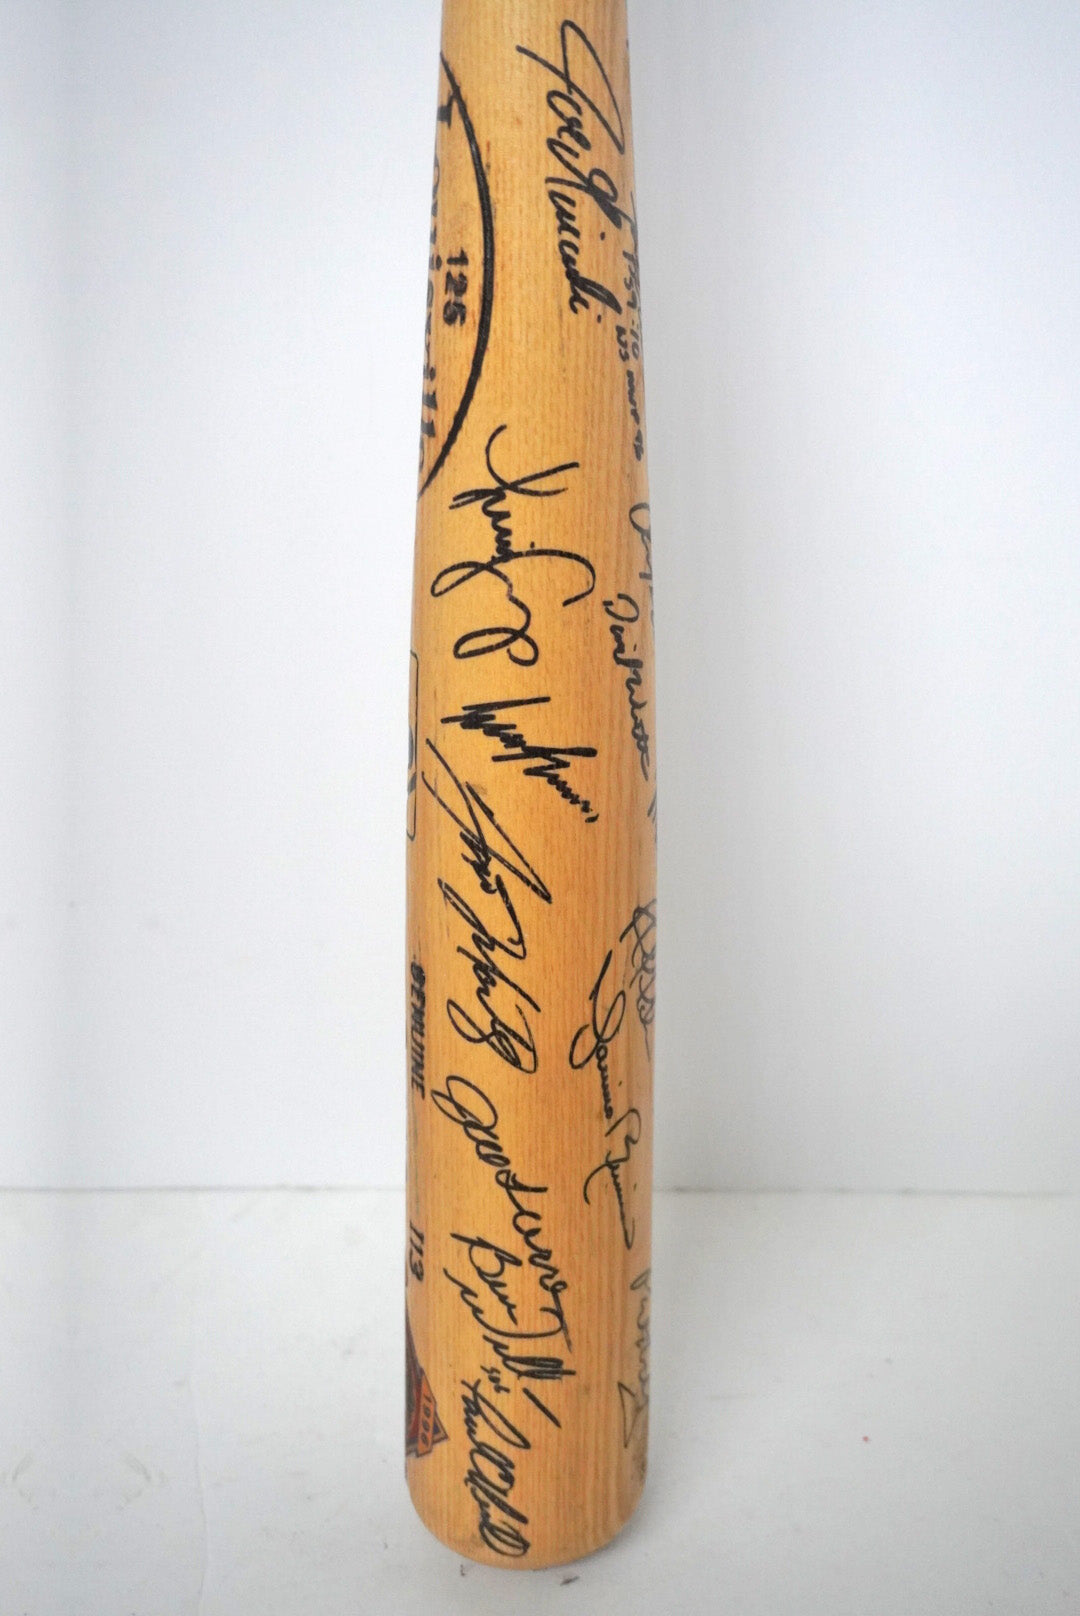 Derek Jeter Louisville game model bat 1996 New York Yankees World Series champs team signed with proof